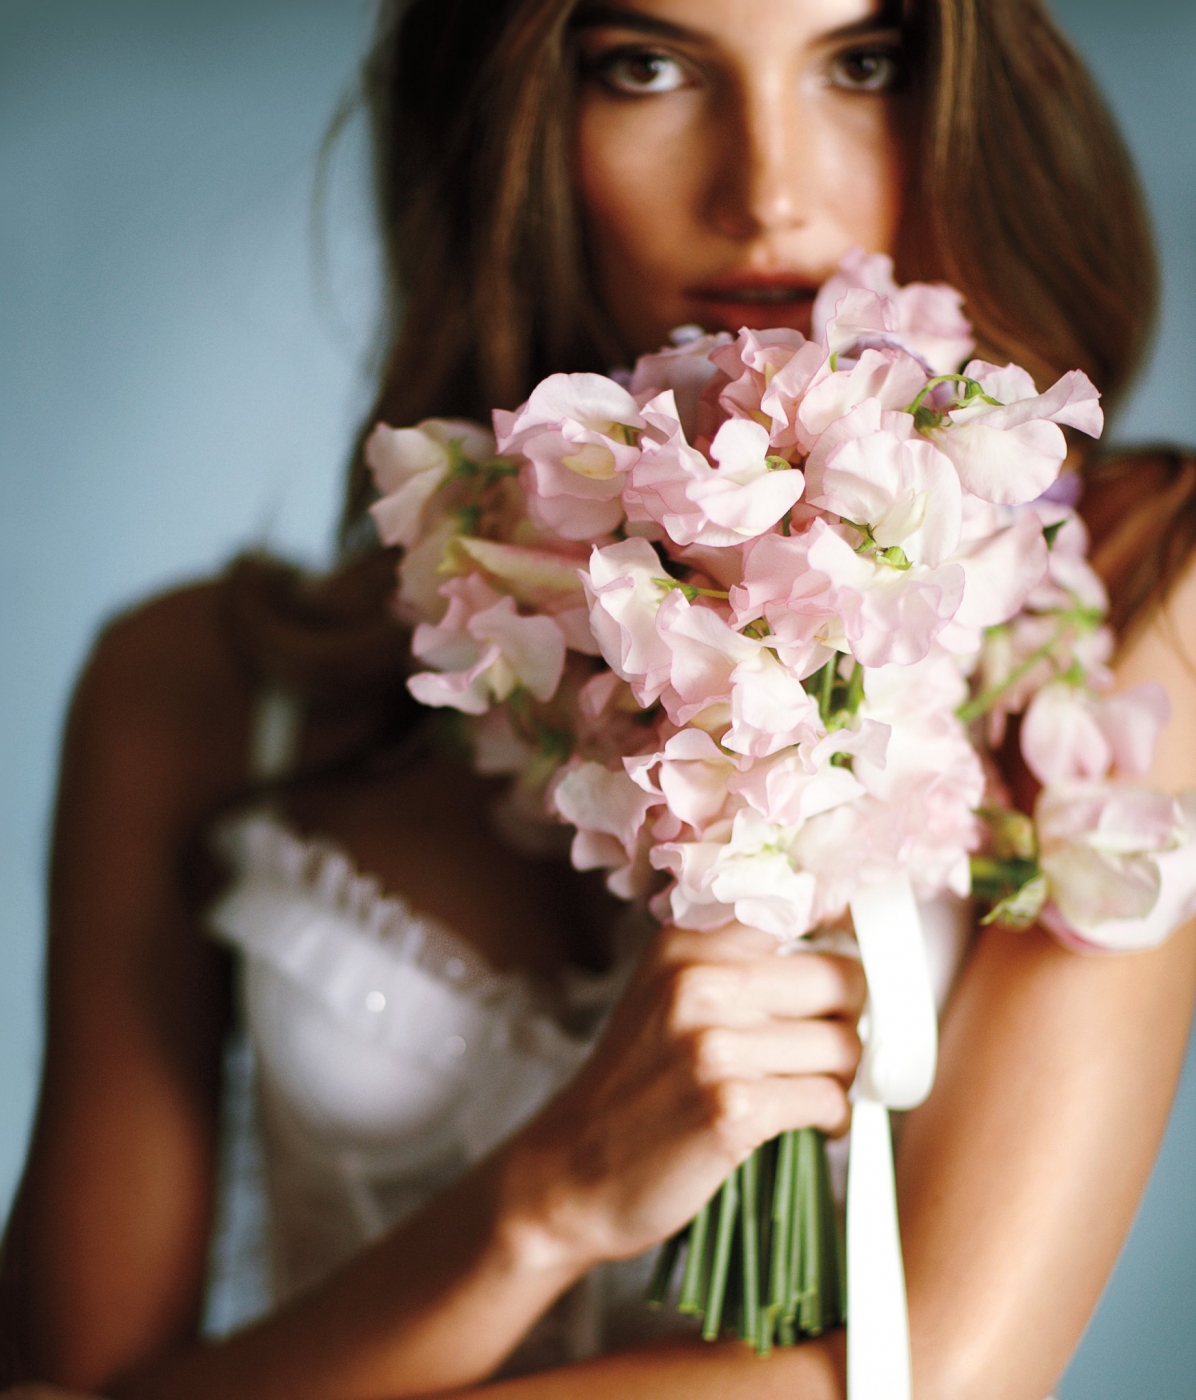 Victoria's Secret Bridal Lingerie in Time for Wedding Season - Victoria's Secret - Wedding - Lingerie